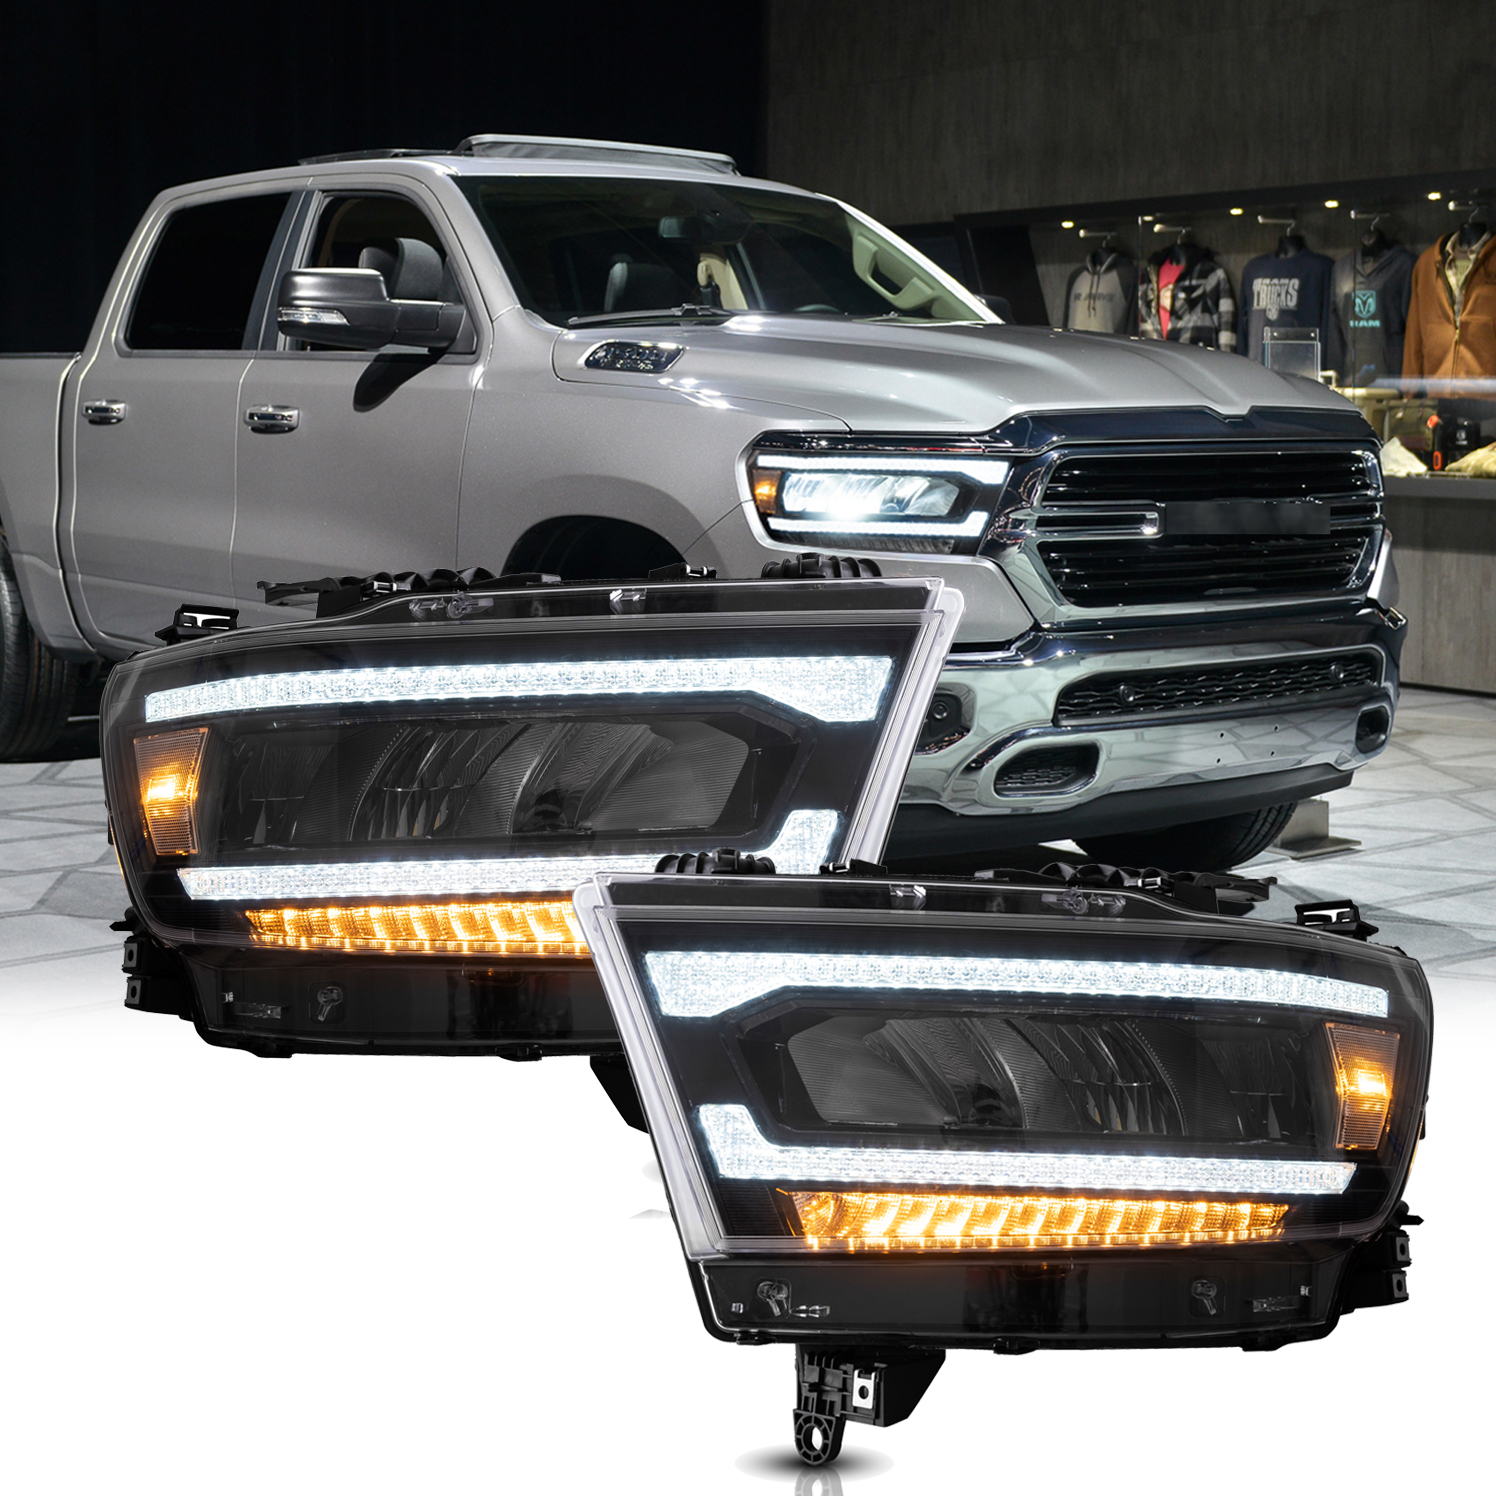 VLAND FULL LED Reflector Headlights Sequential Turn For 2019-2021 Dodge Ram 1500 | eBay 2016 Ram 1500 Big Horn Led Headlights